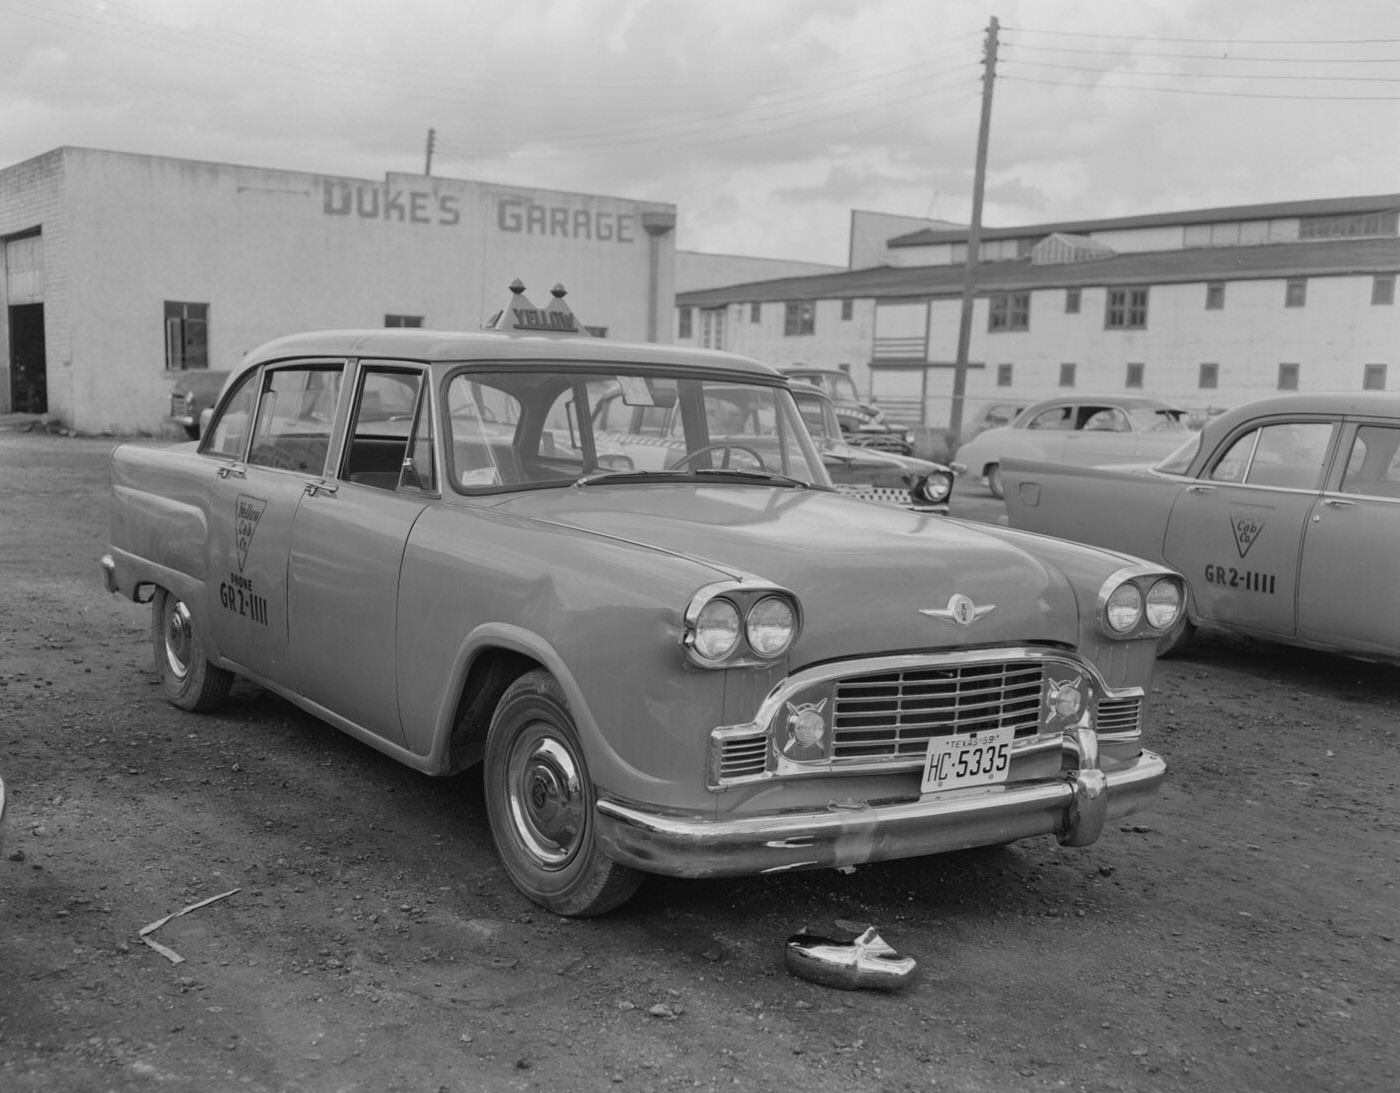 Yellow Cab Company Cabs Near Duke's Garage, 1959.